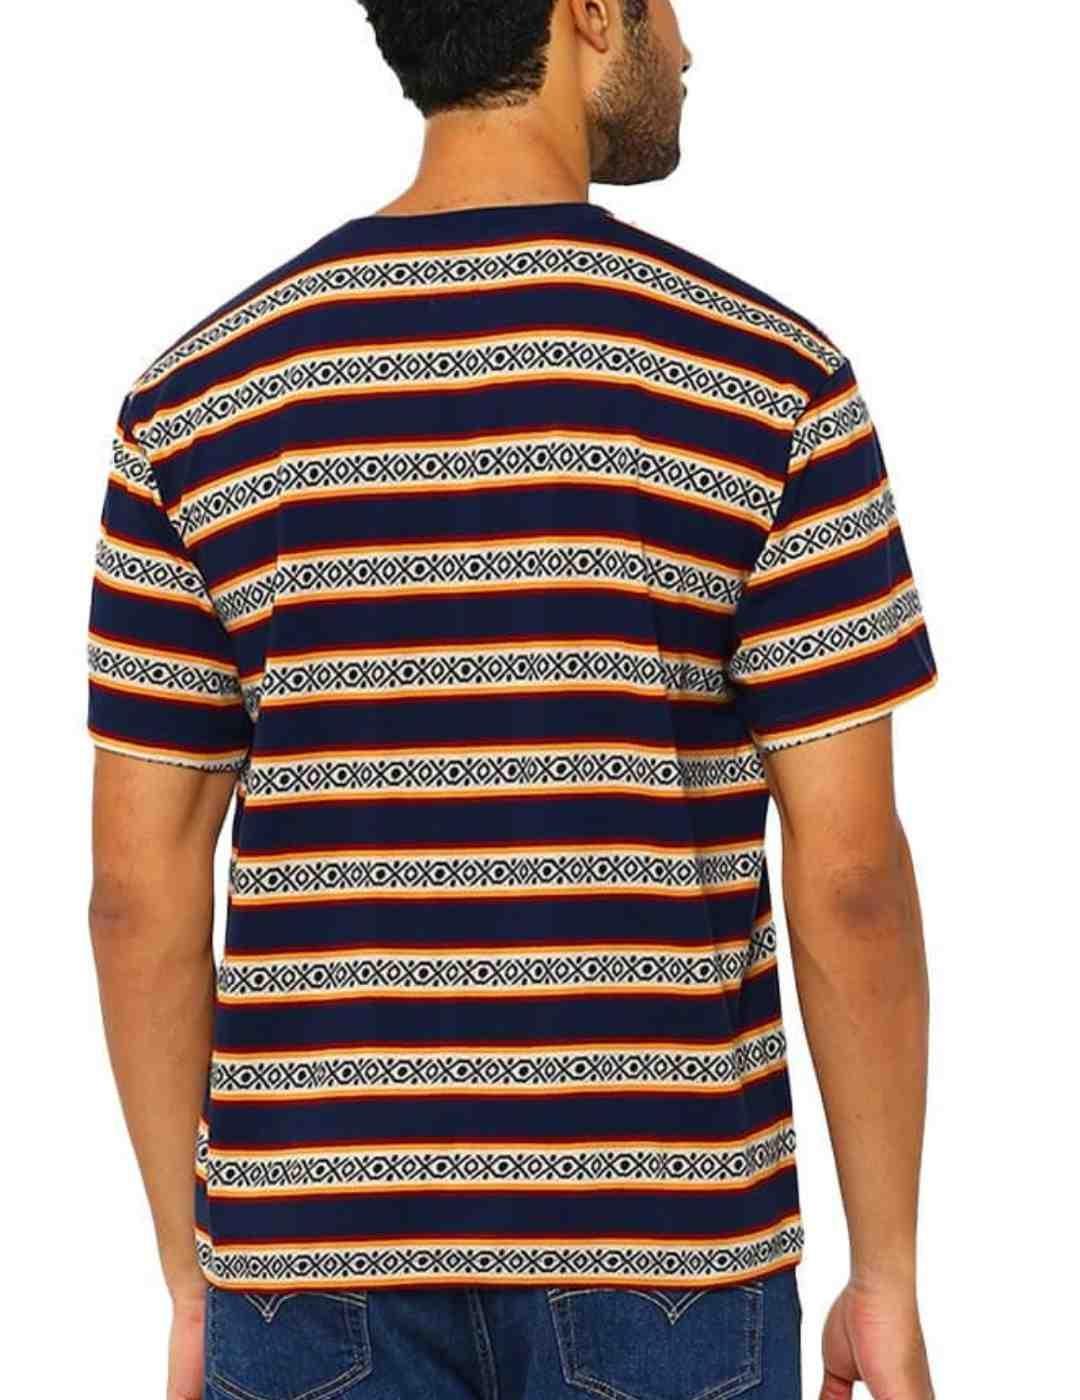 Camiseta Levi´s vintage multicolor manga corta de hombre